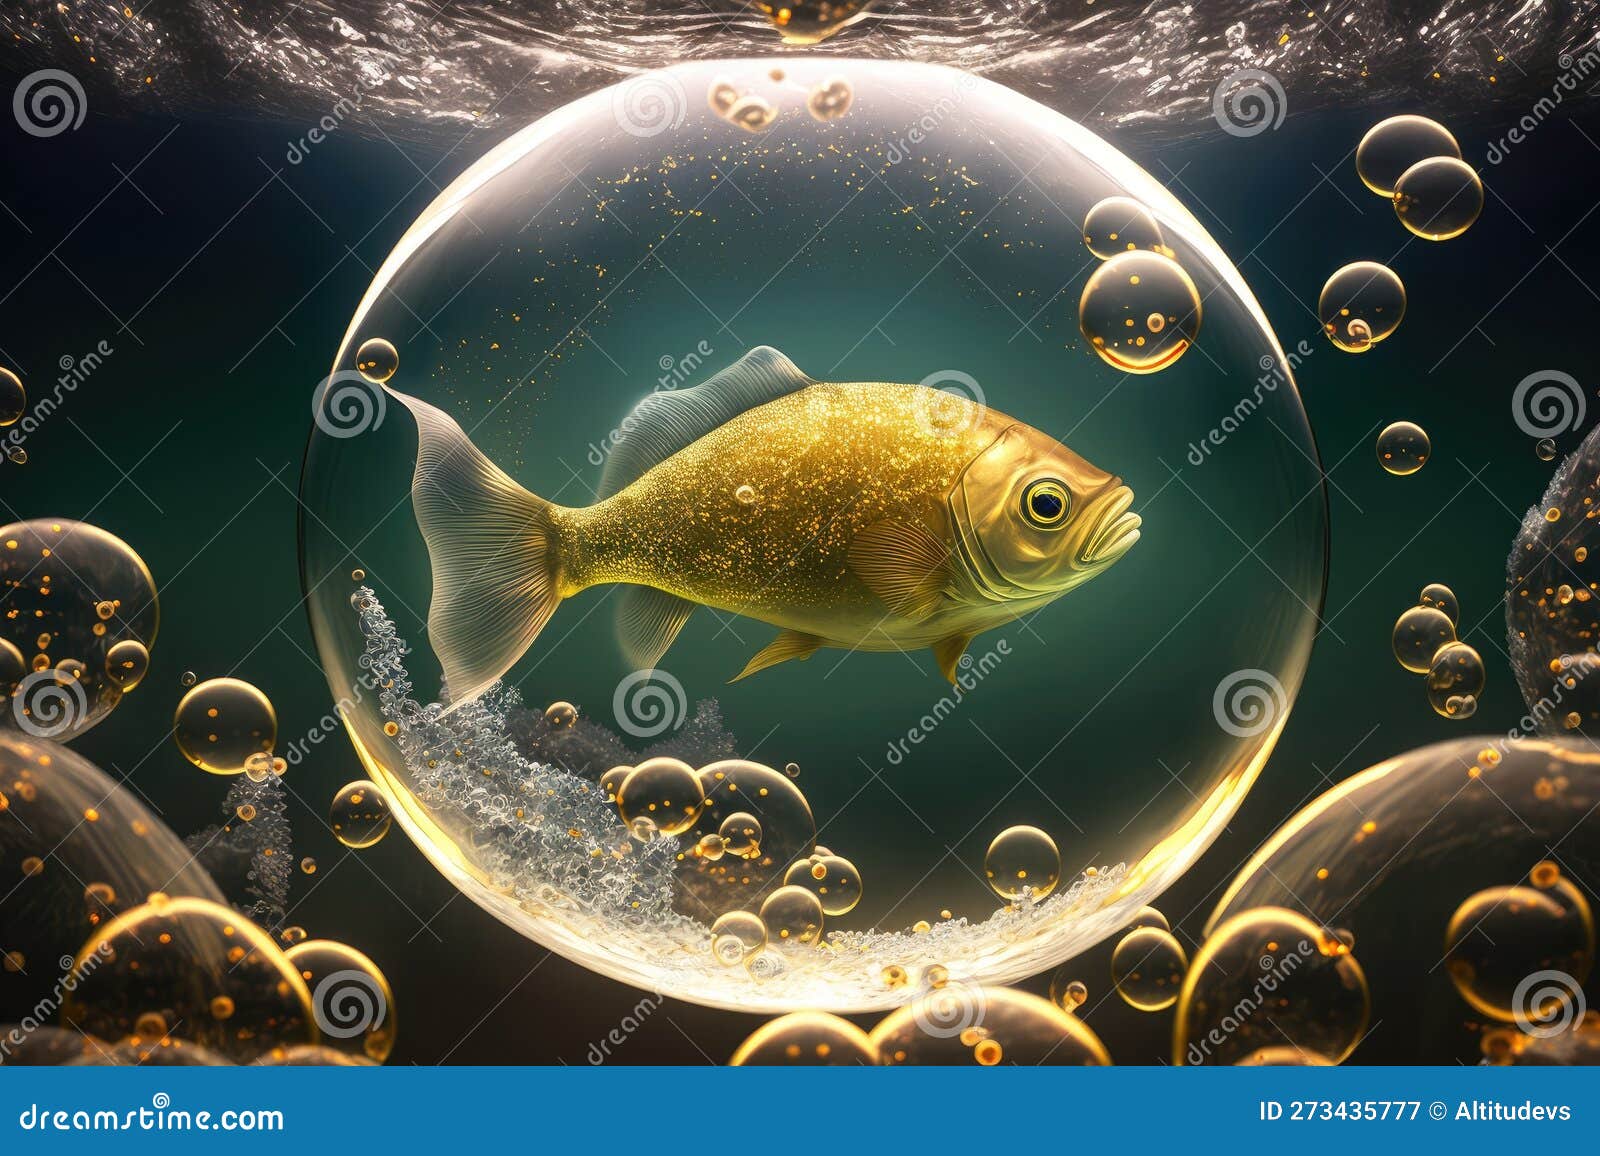 https://thumbs.dreamstime.com/z/mer-sardine-dans-l-espace-bulles-avec-oxyg%C3%A8ne-aquarium-poissons-poisson-cr%C3%A9%C3%A9-ai-g%C3%A9n%C3%A9ratrice-273435777.jpg